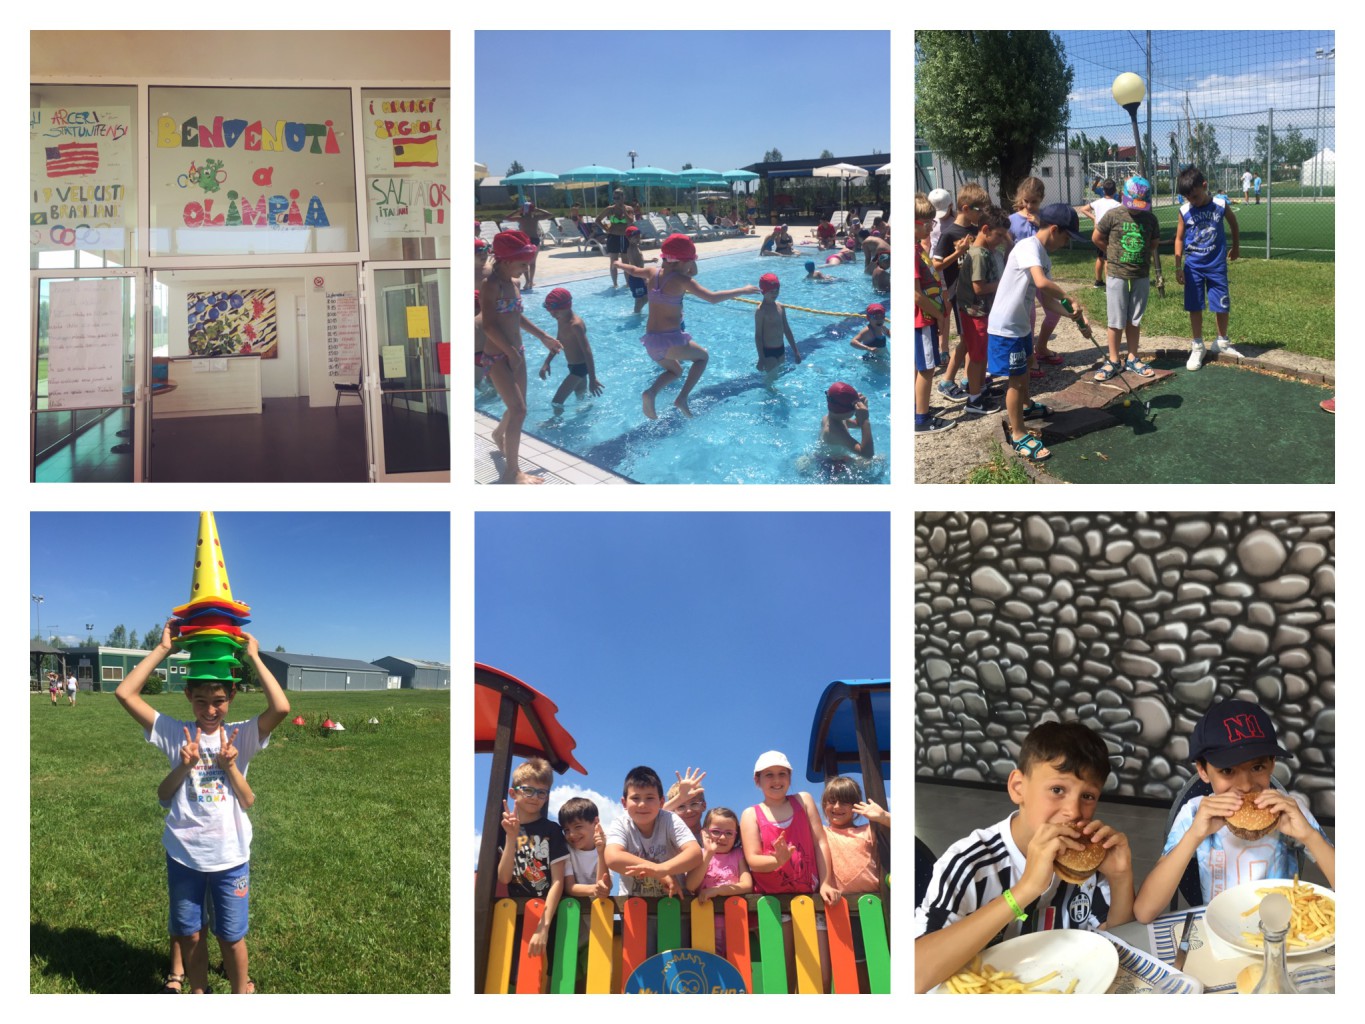 summer camp Olimpia - Parco di Livenza